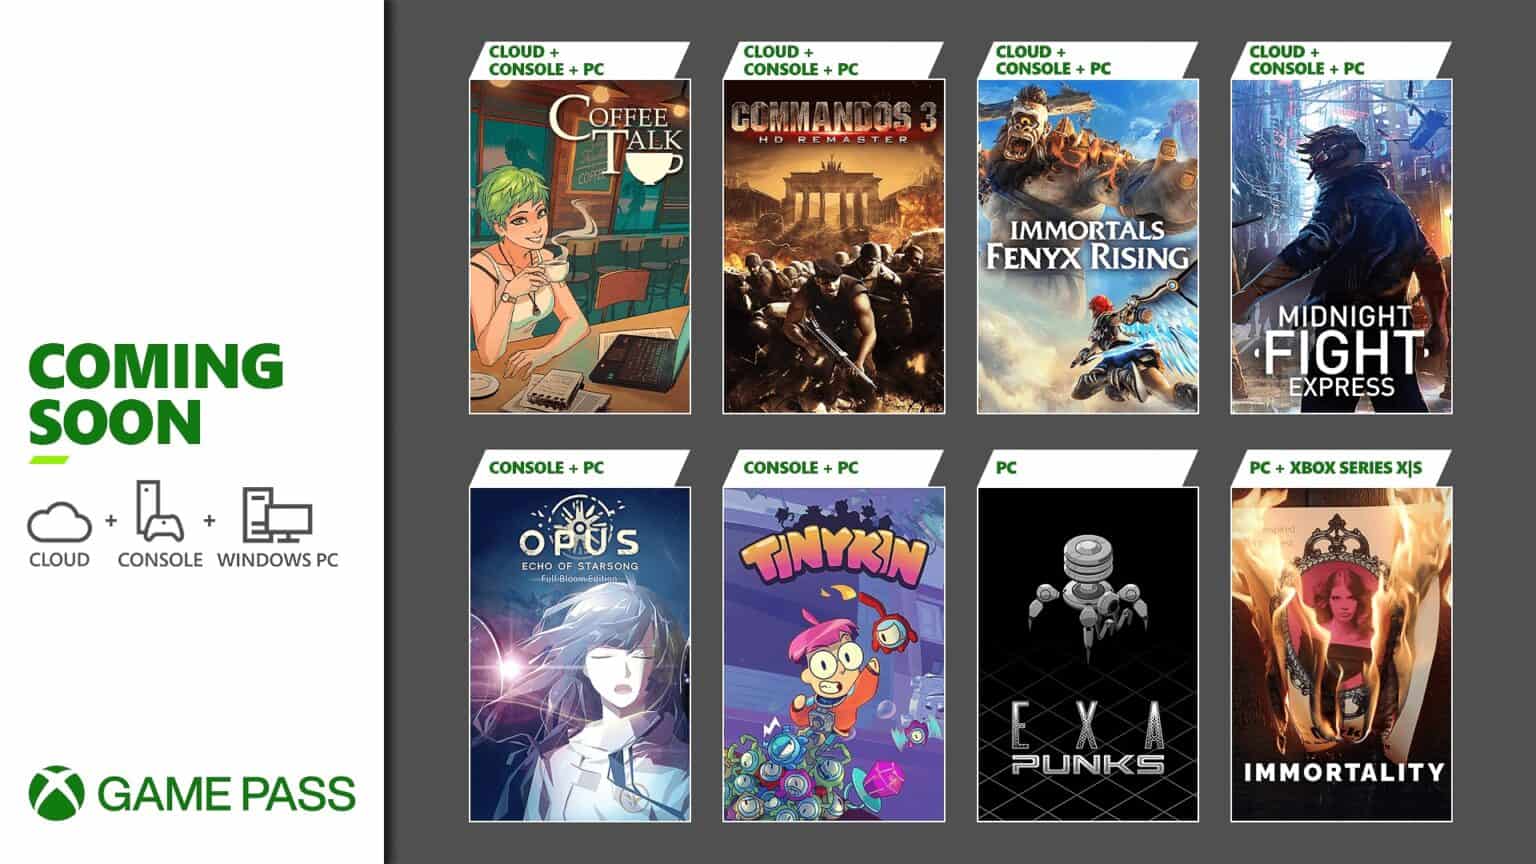 Xbox Game Pass Core  Confira a lista completa de jogos do serviço